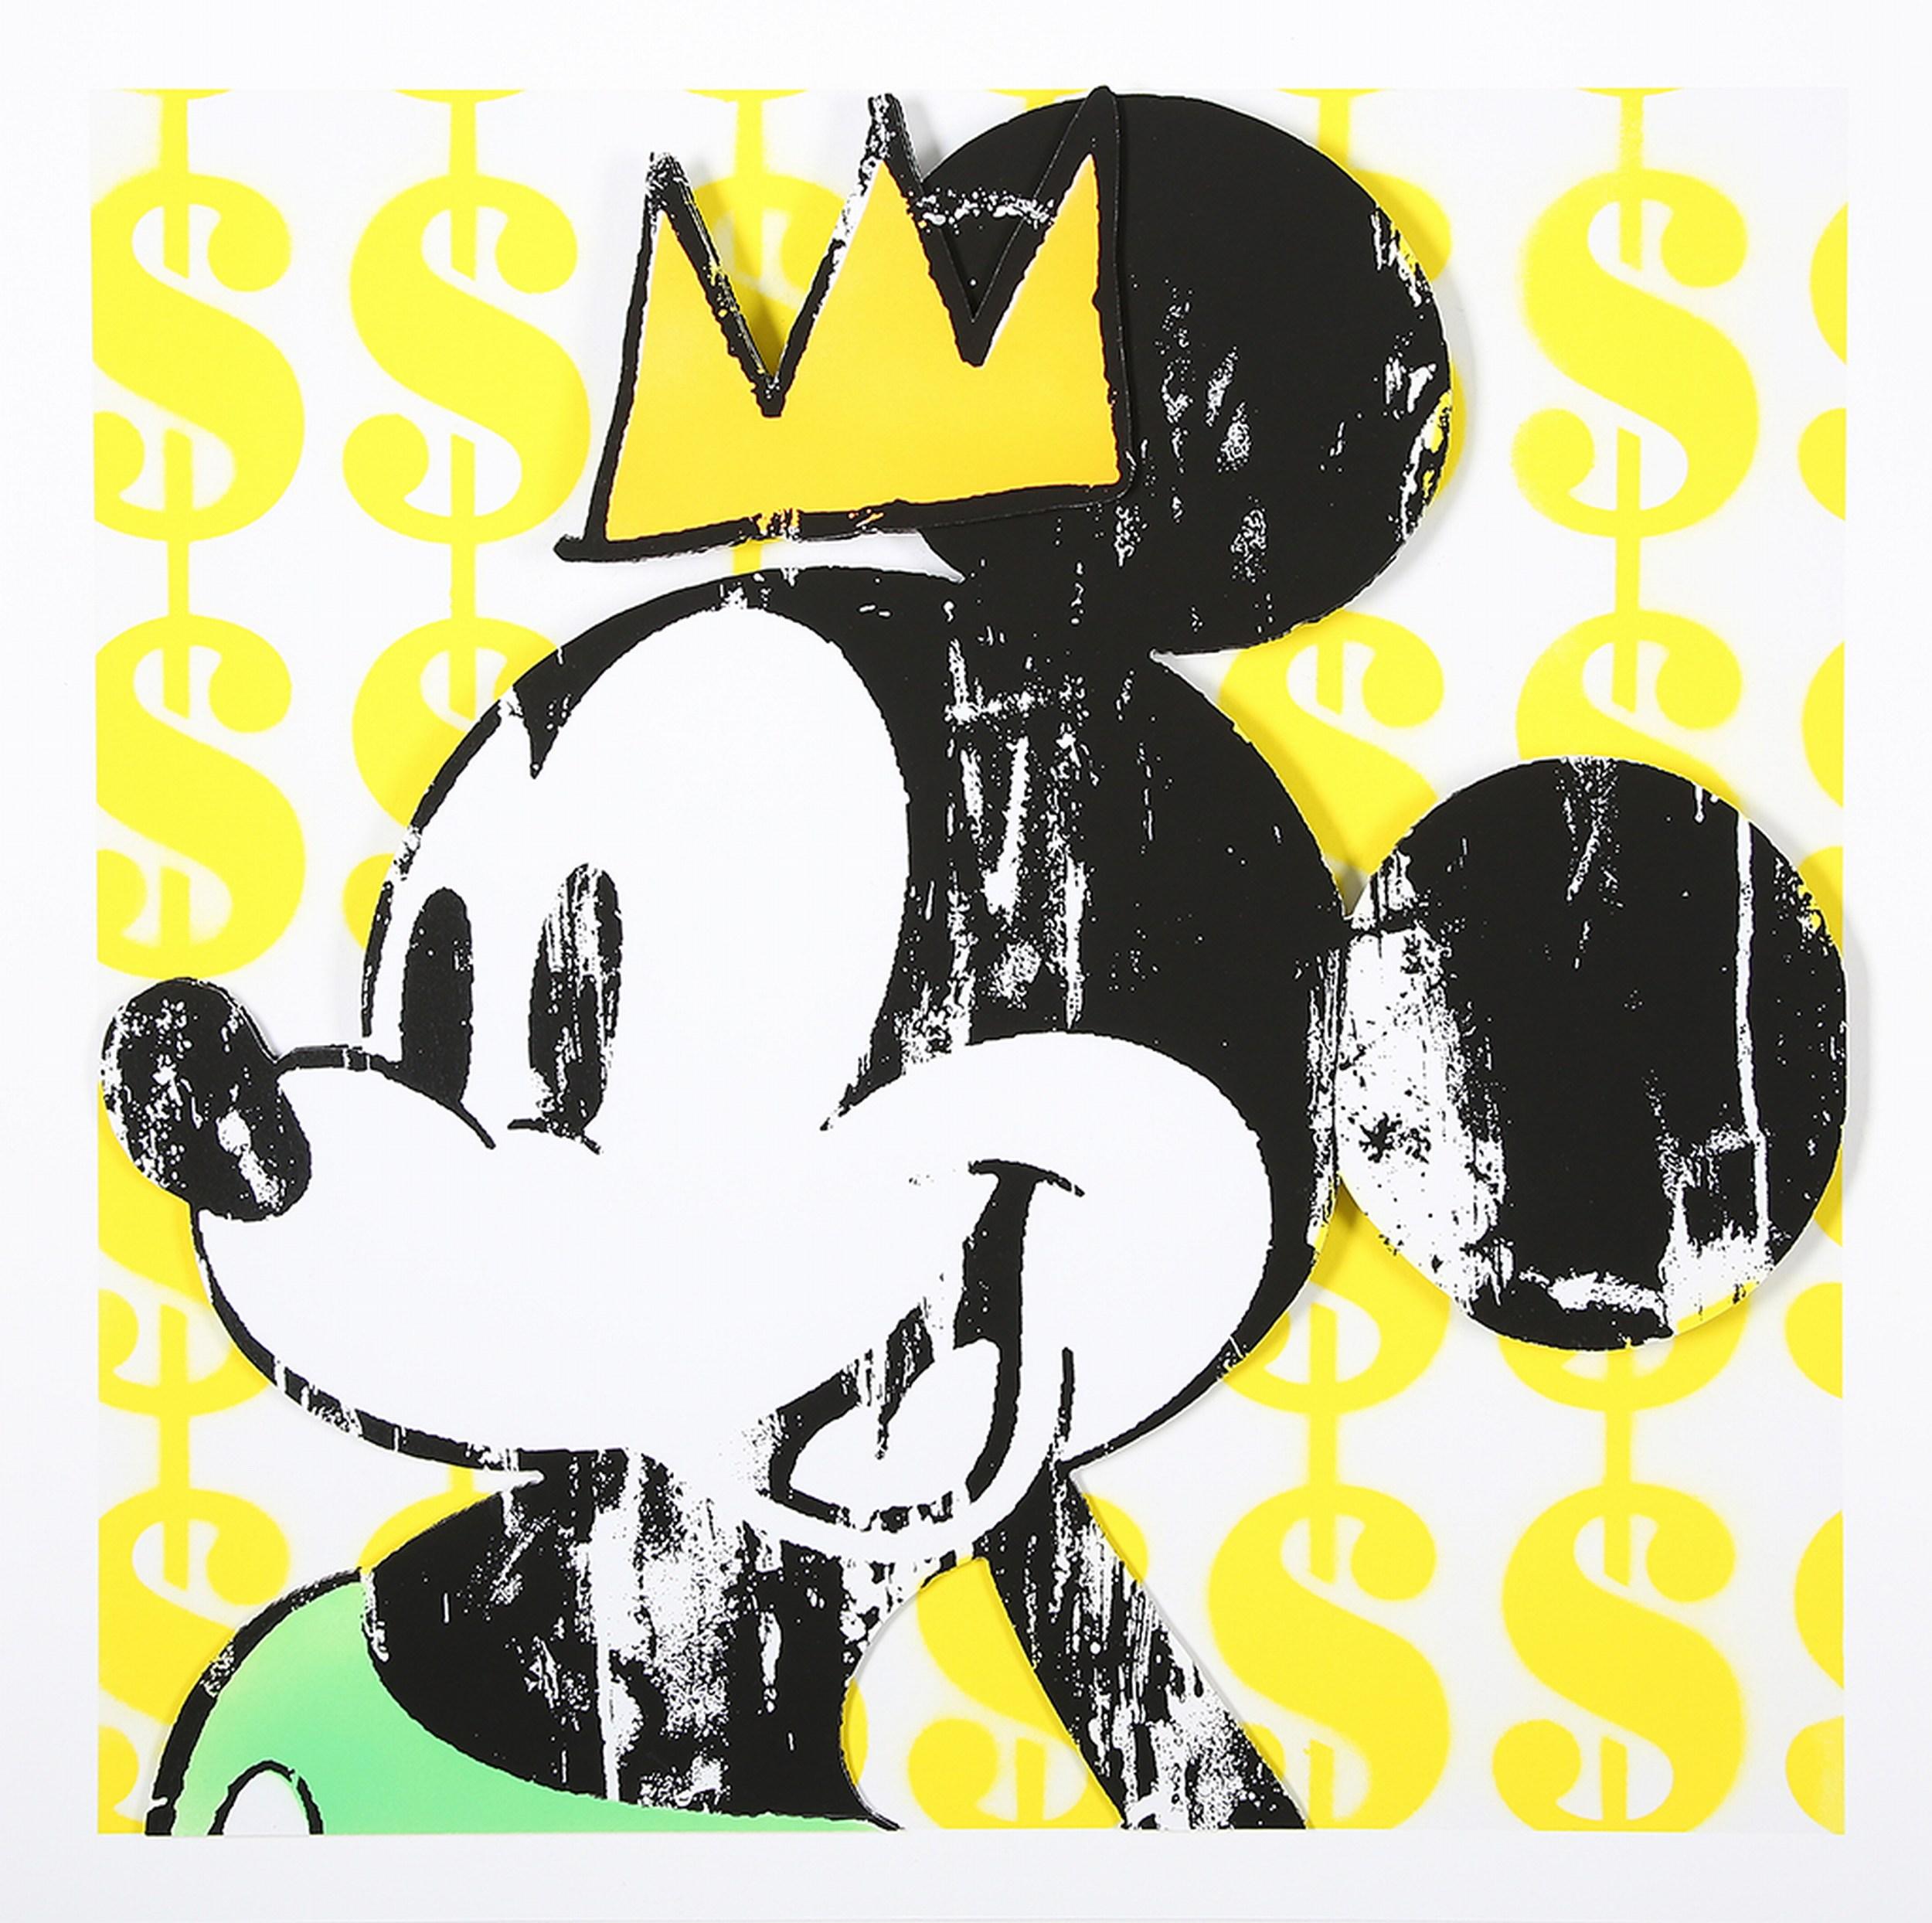 King Mickey with Basquiat Crown (YELLOW, Pop Art, Street Art, Disney) - Print by Ben Allen